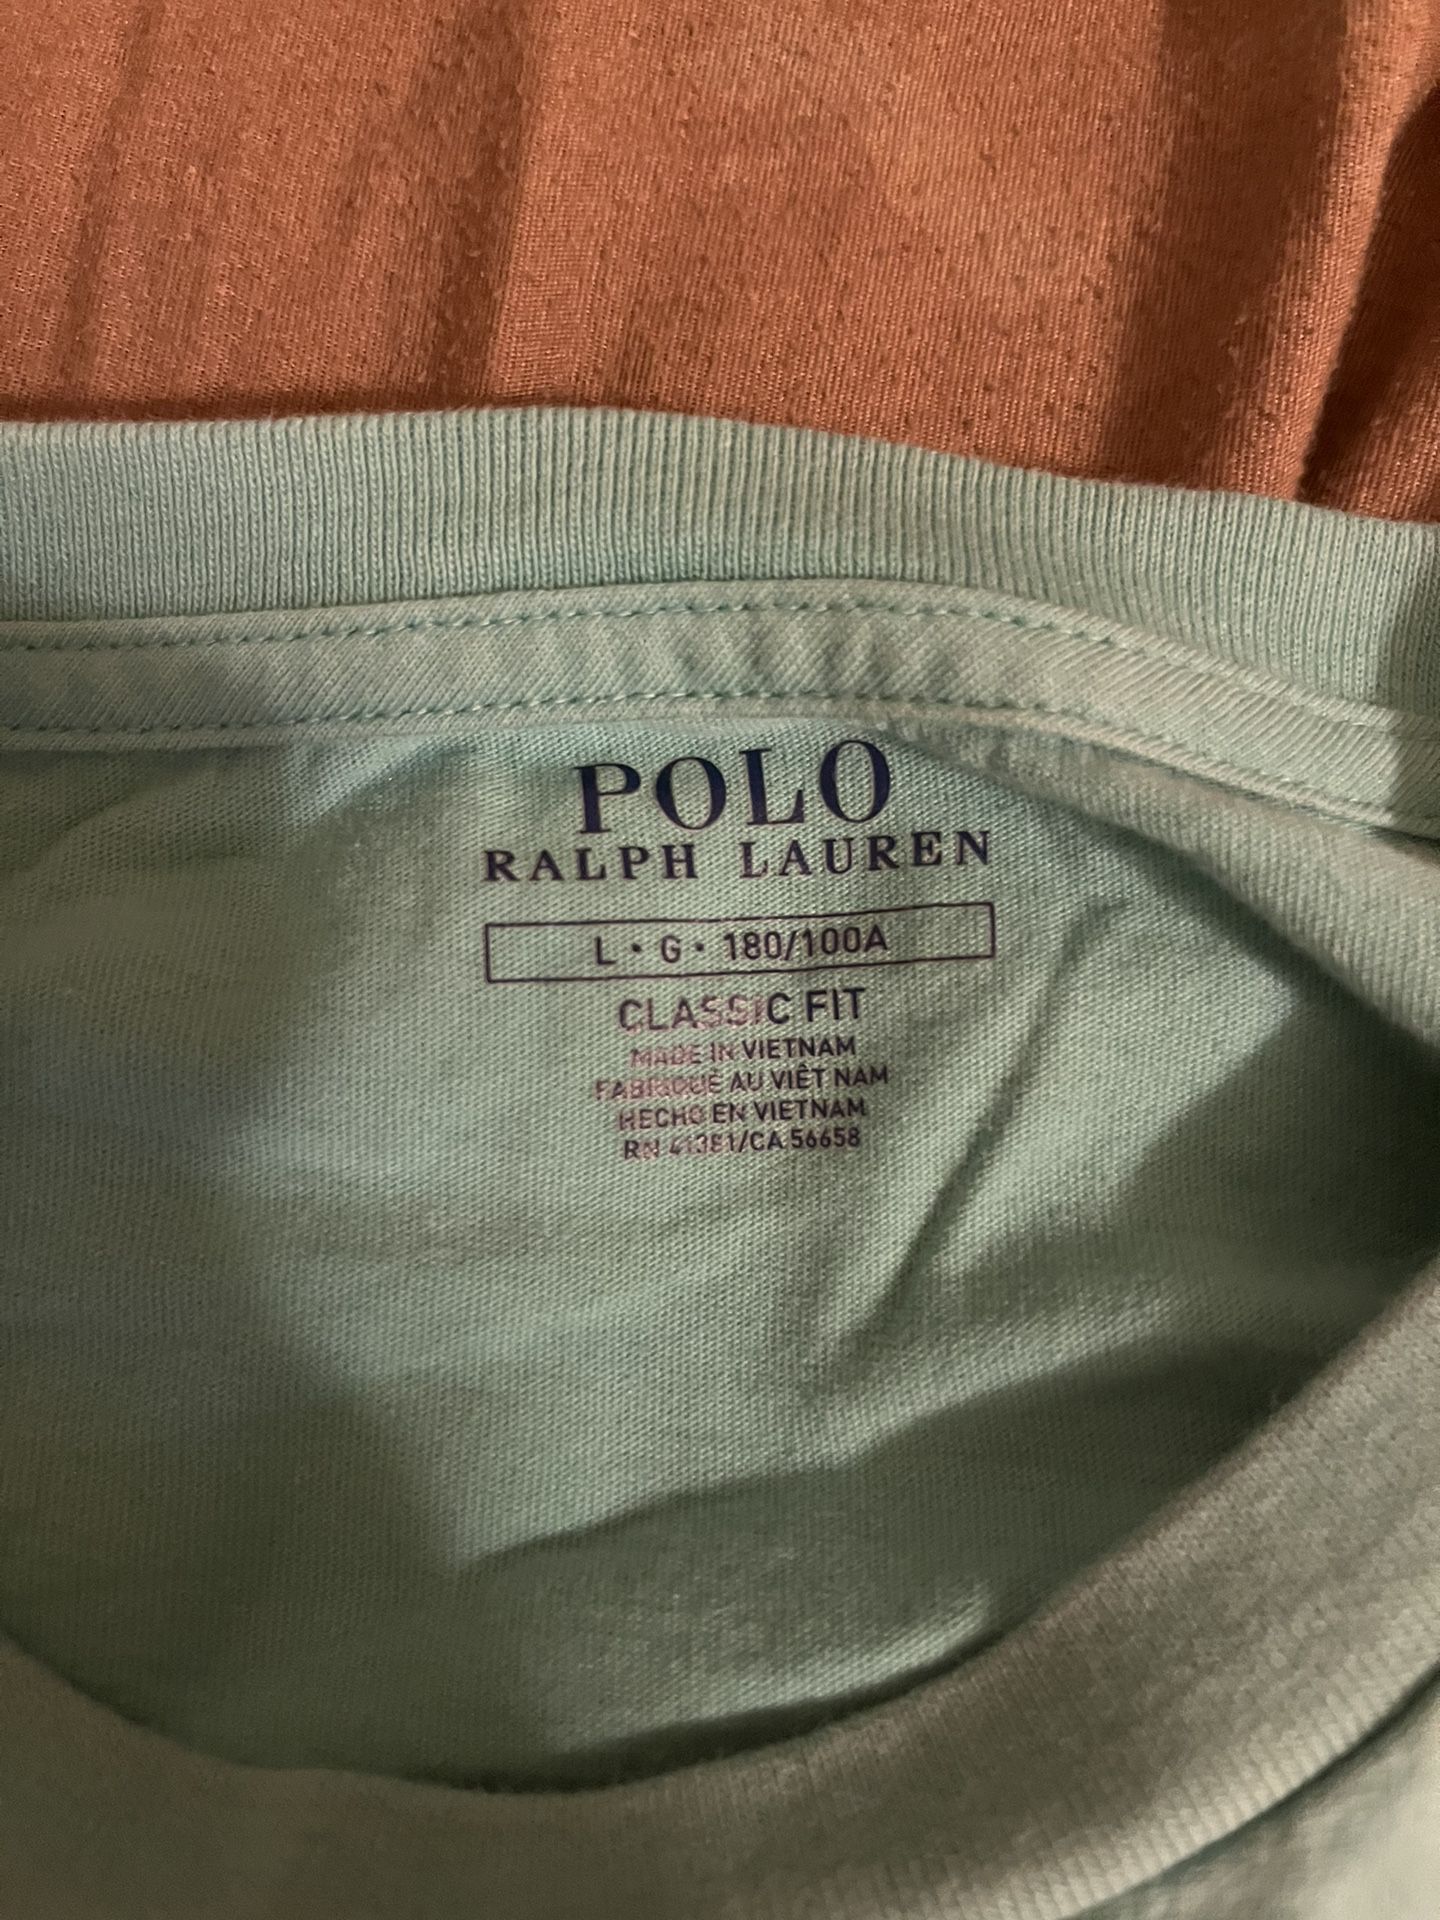 Vintage Polo, Ralph Lauren, Single Stitch